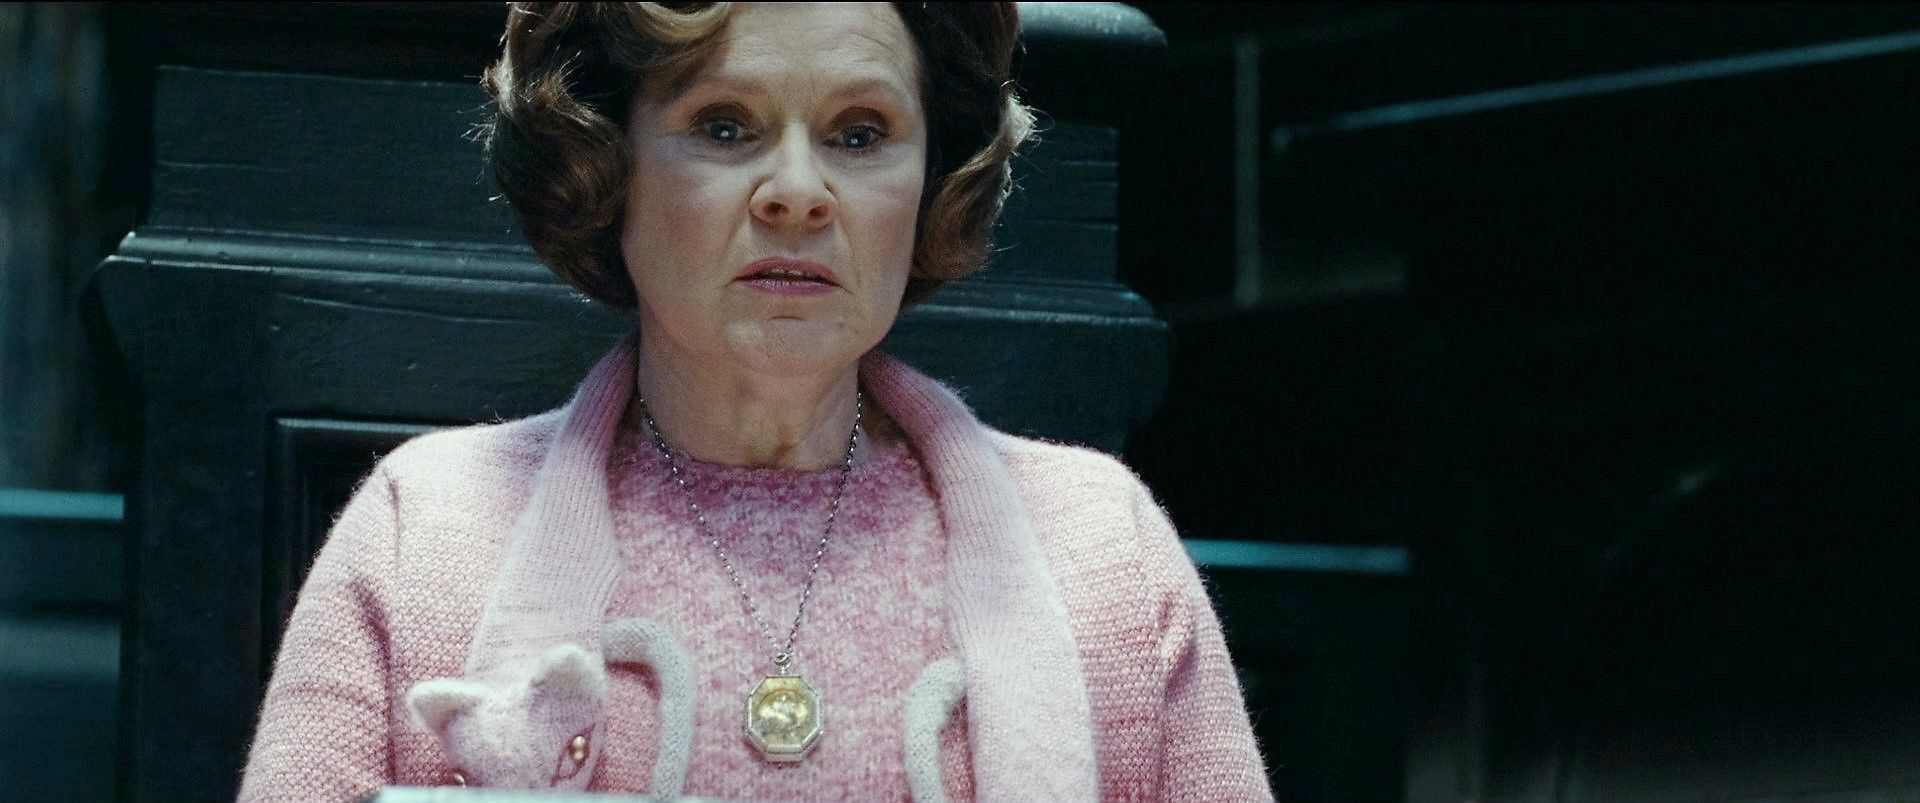 Dolores Umbridge wearing the Slytherin locket in Harry Potter